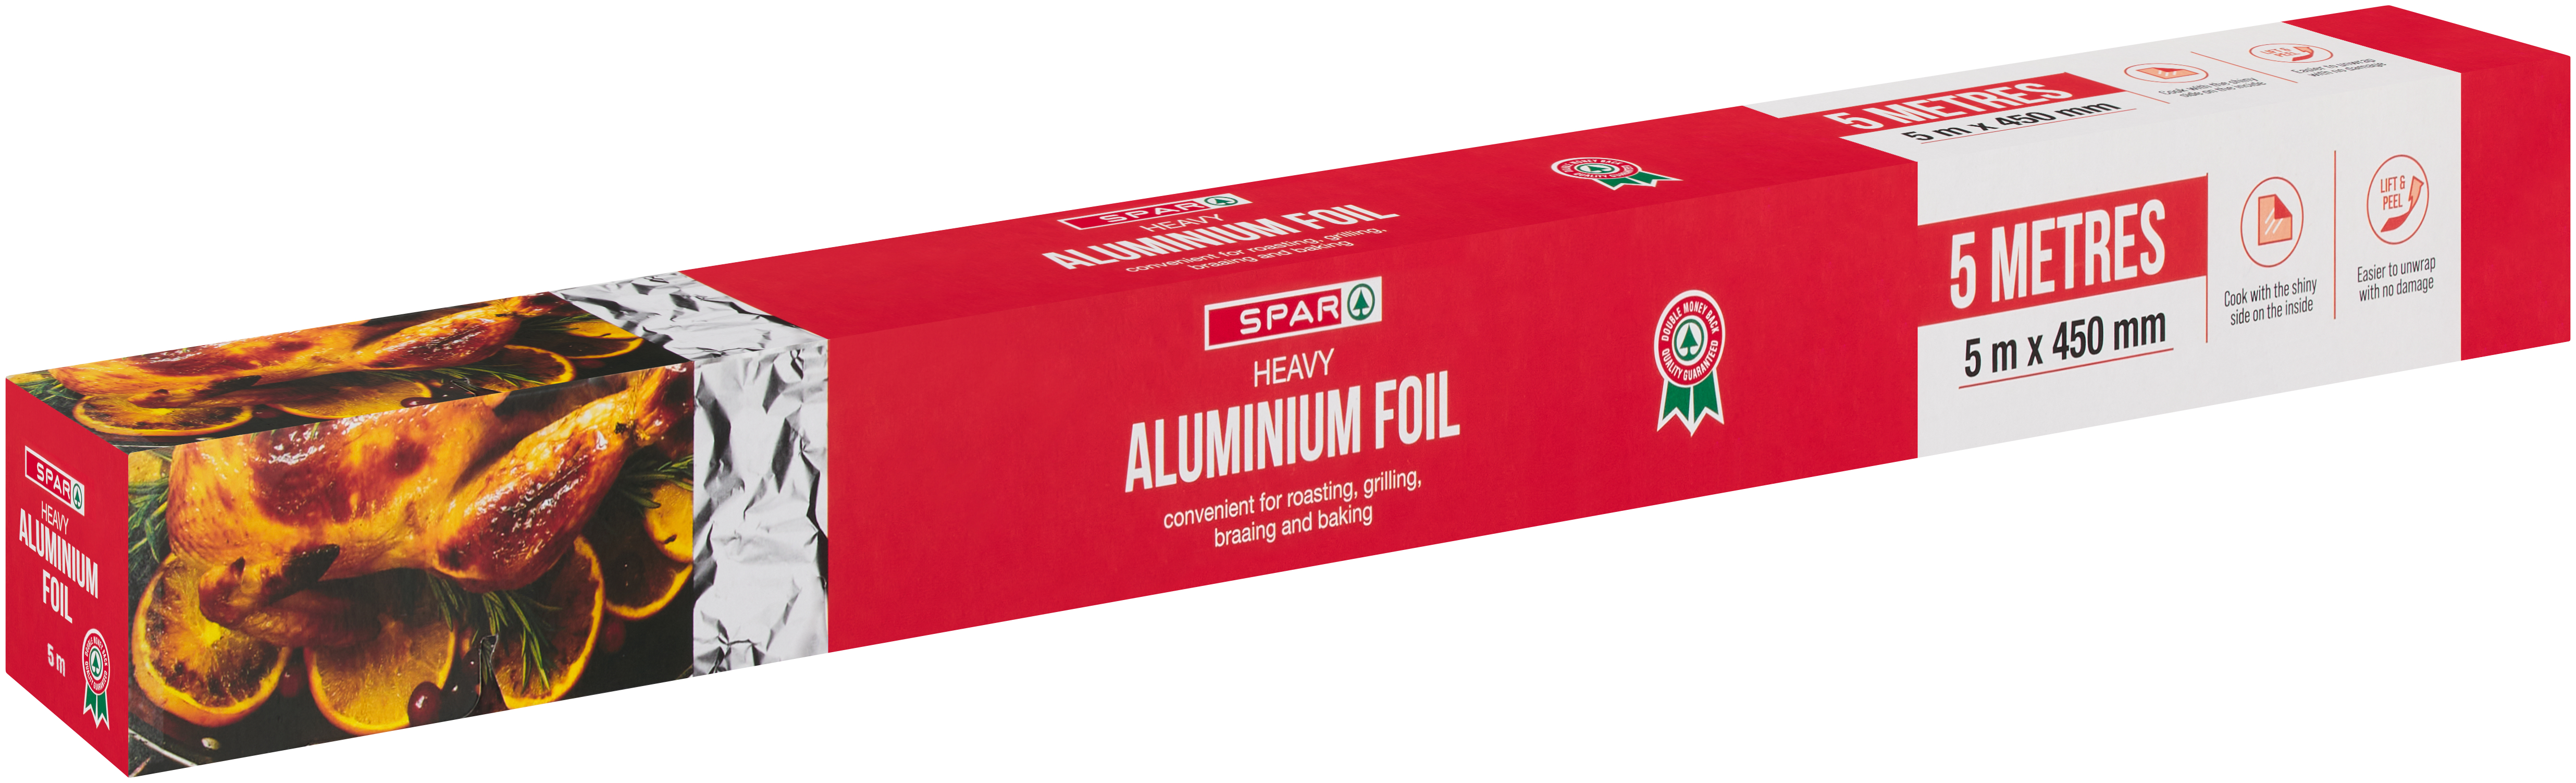 heavy aluminium foil